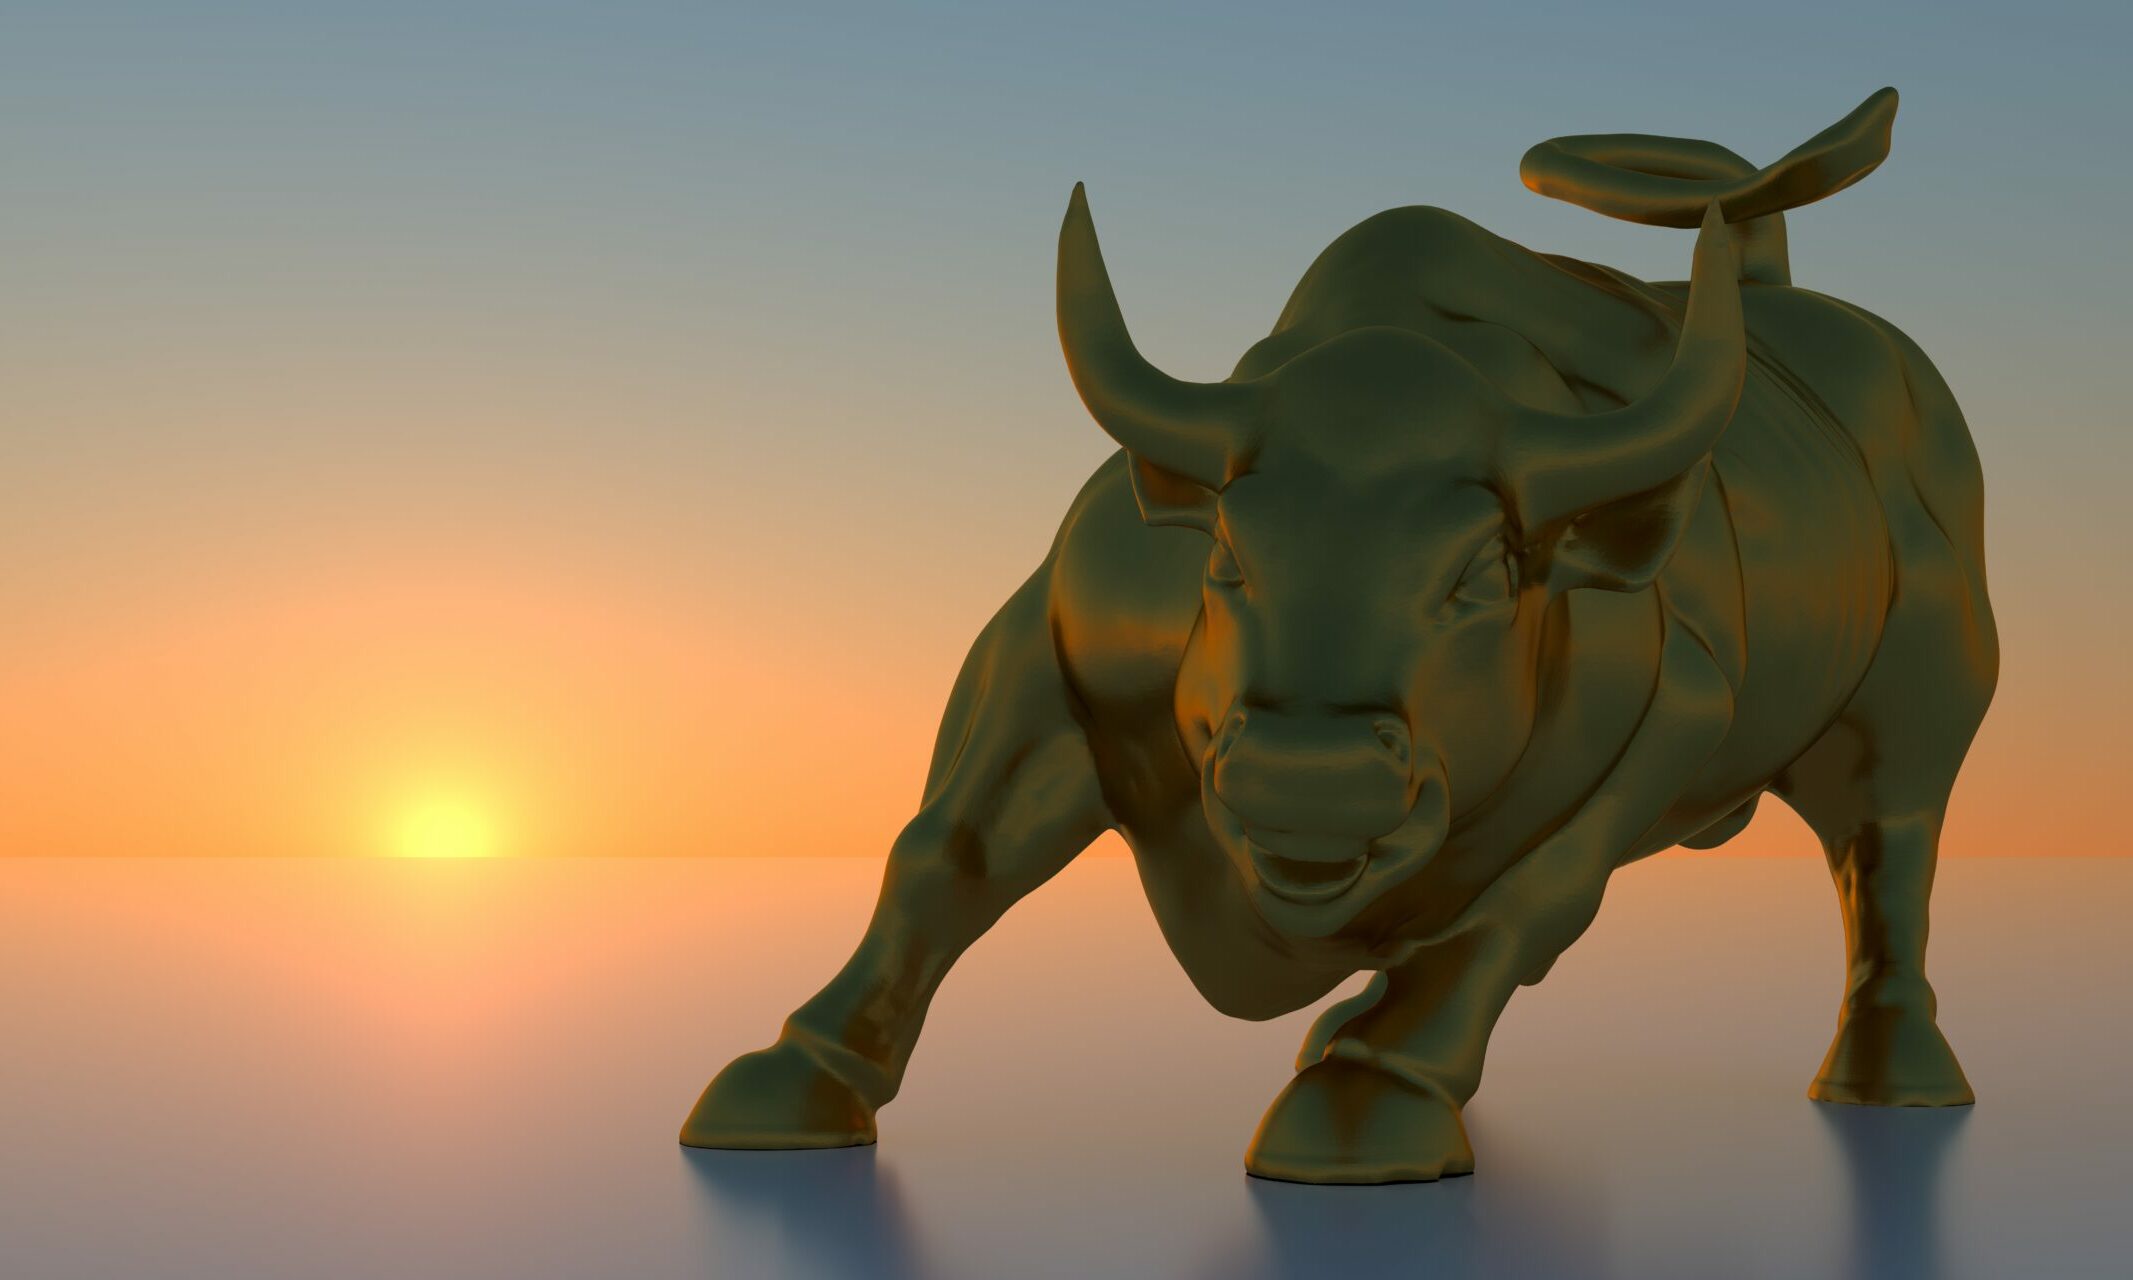 Charging Bull Wall Street Bull 3D illustration of the Bowling Gr